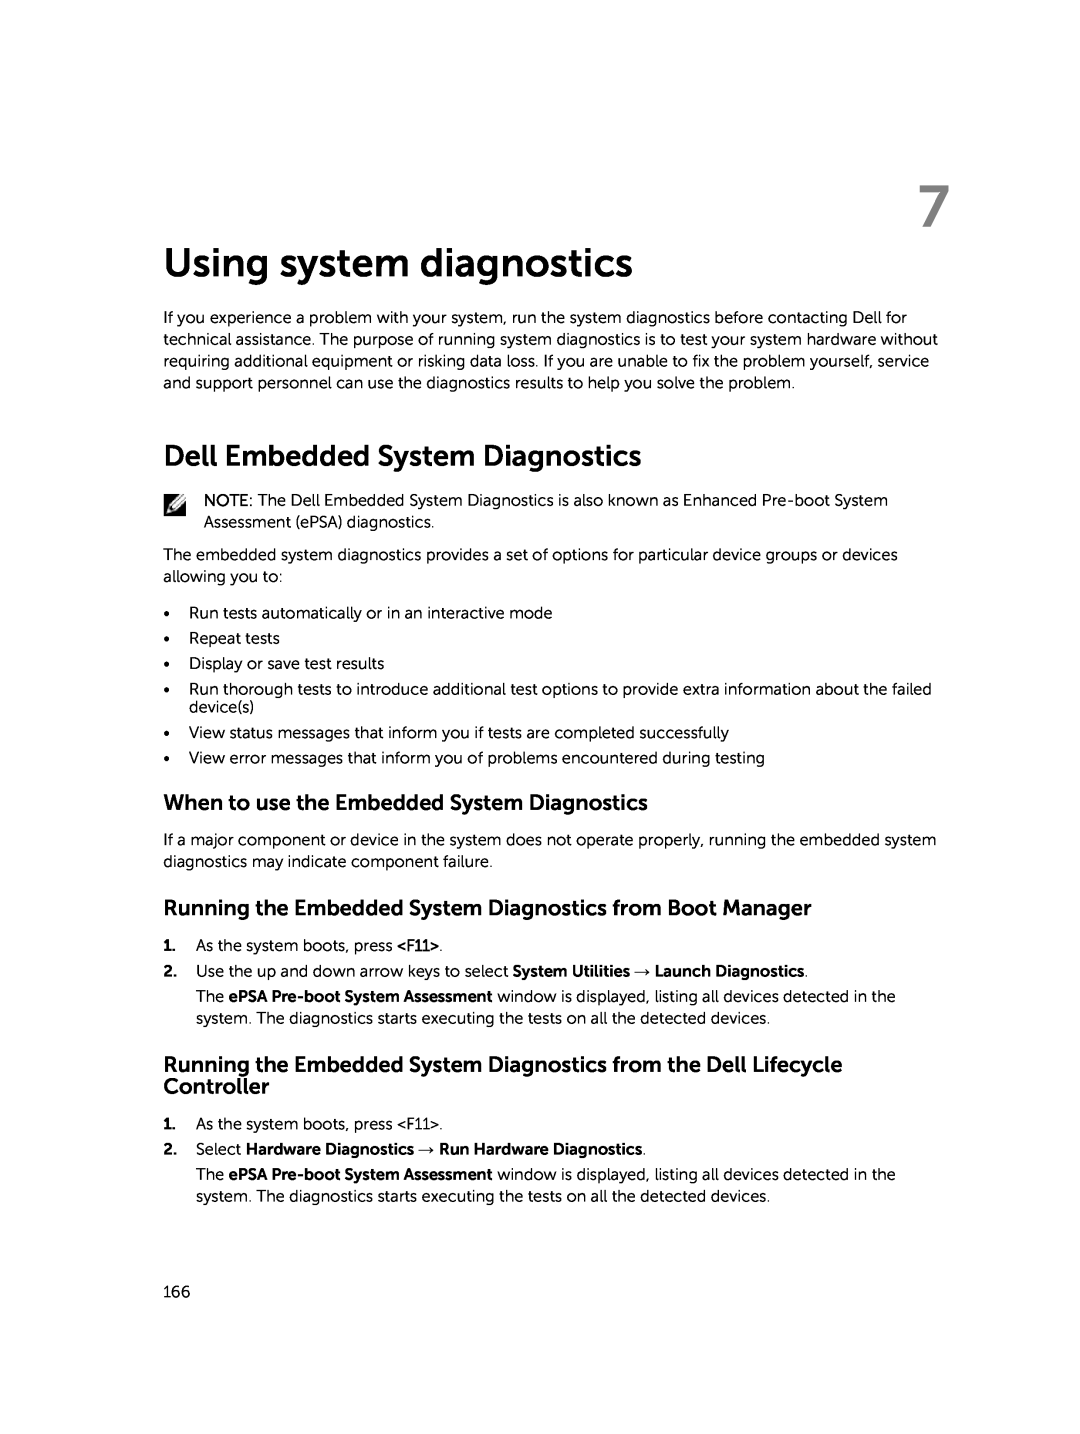 Dell E30S Using system diagnostics, Dell Embedded System Diagnostics, When to use the Embedded System Diagnostics 